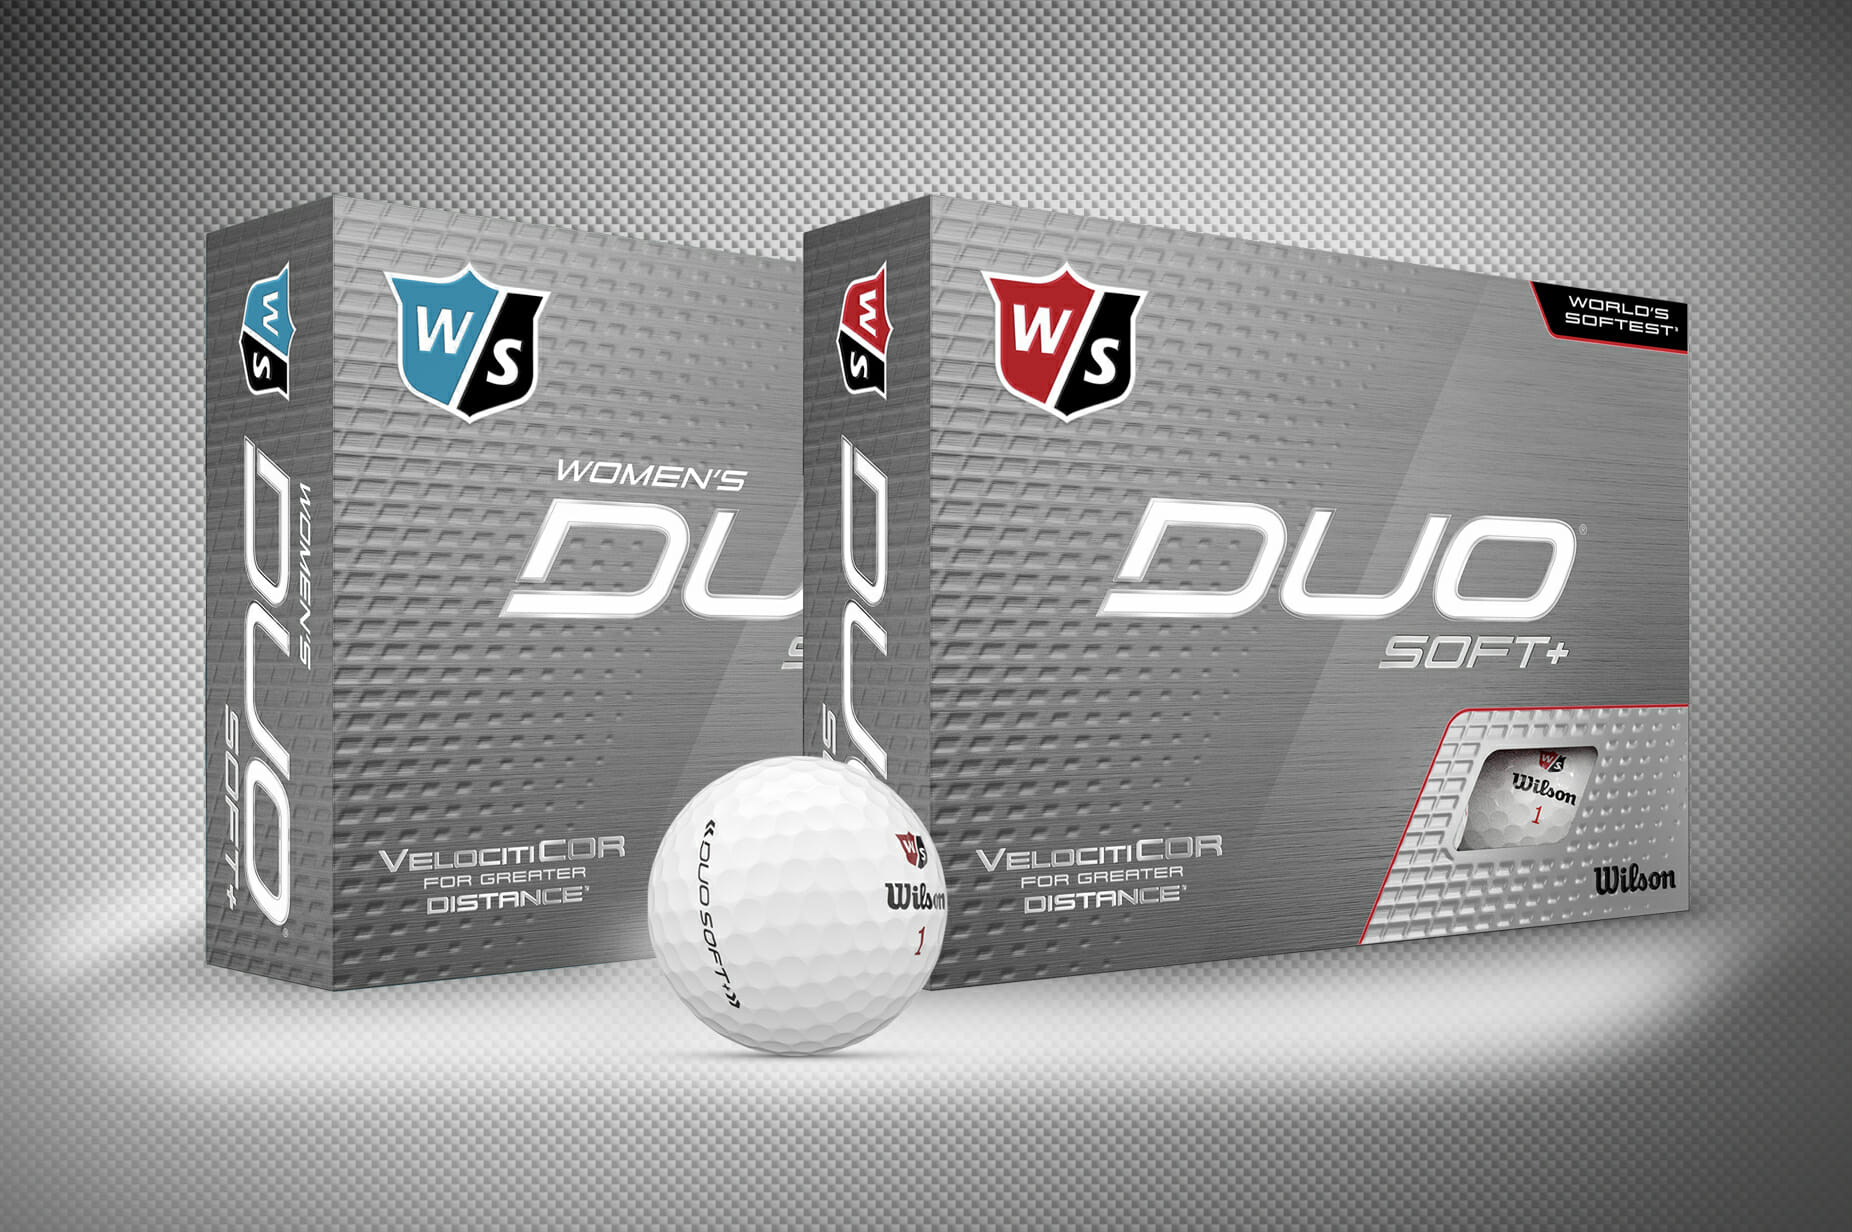 Wilson reveal new DUO Soft+ and DUO Optix golf balls